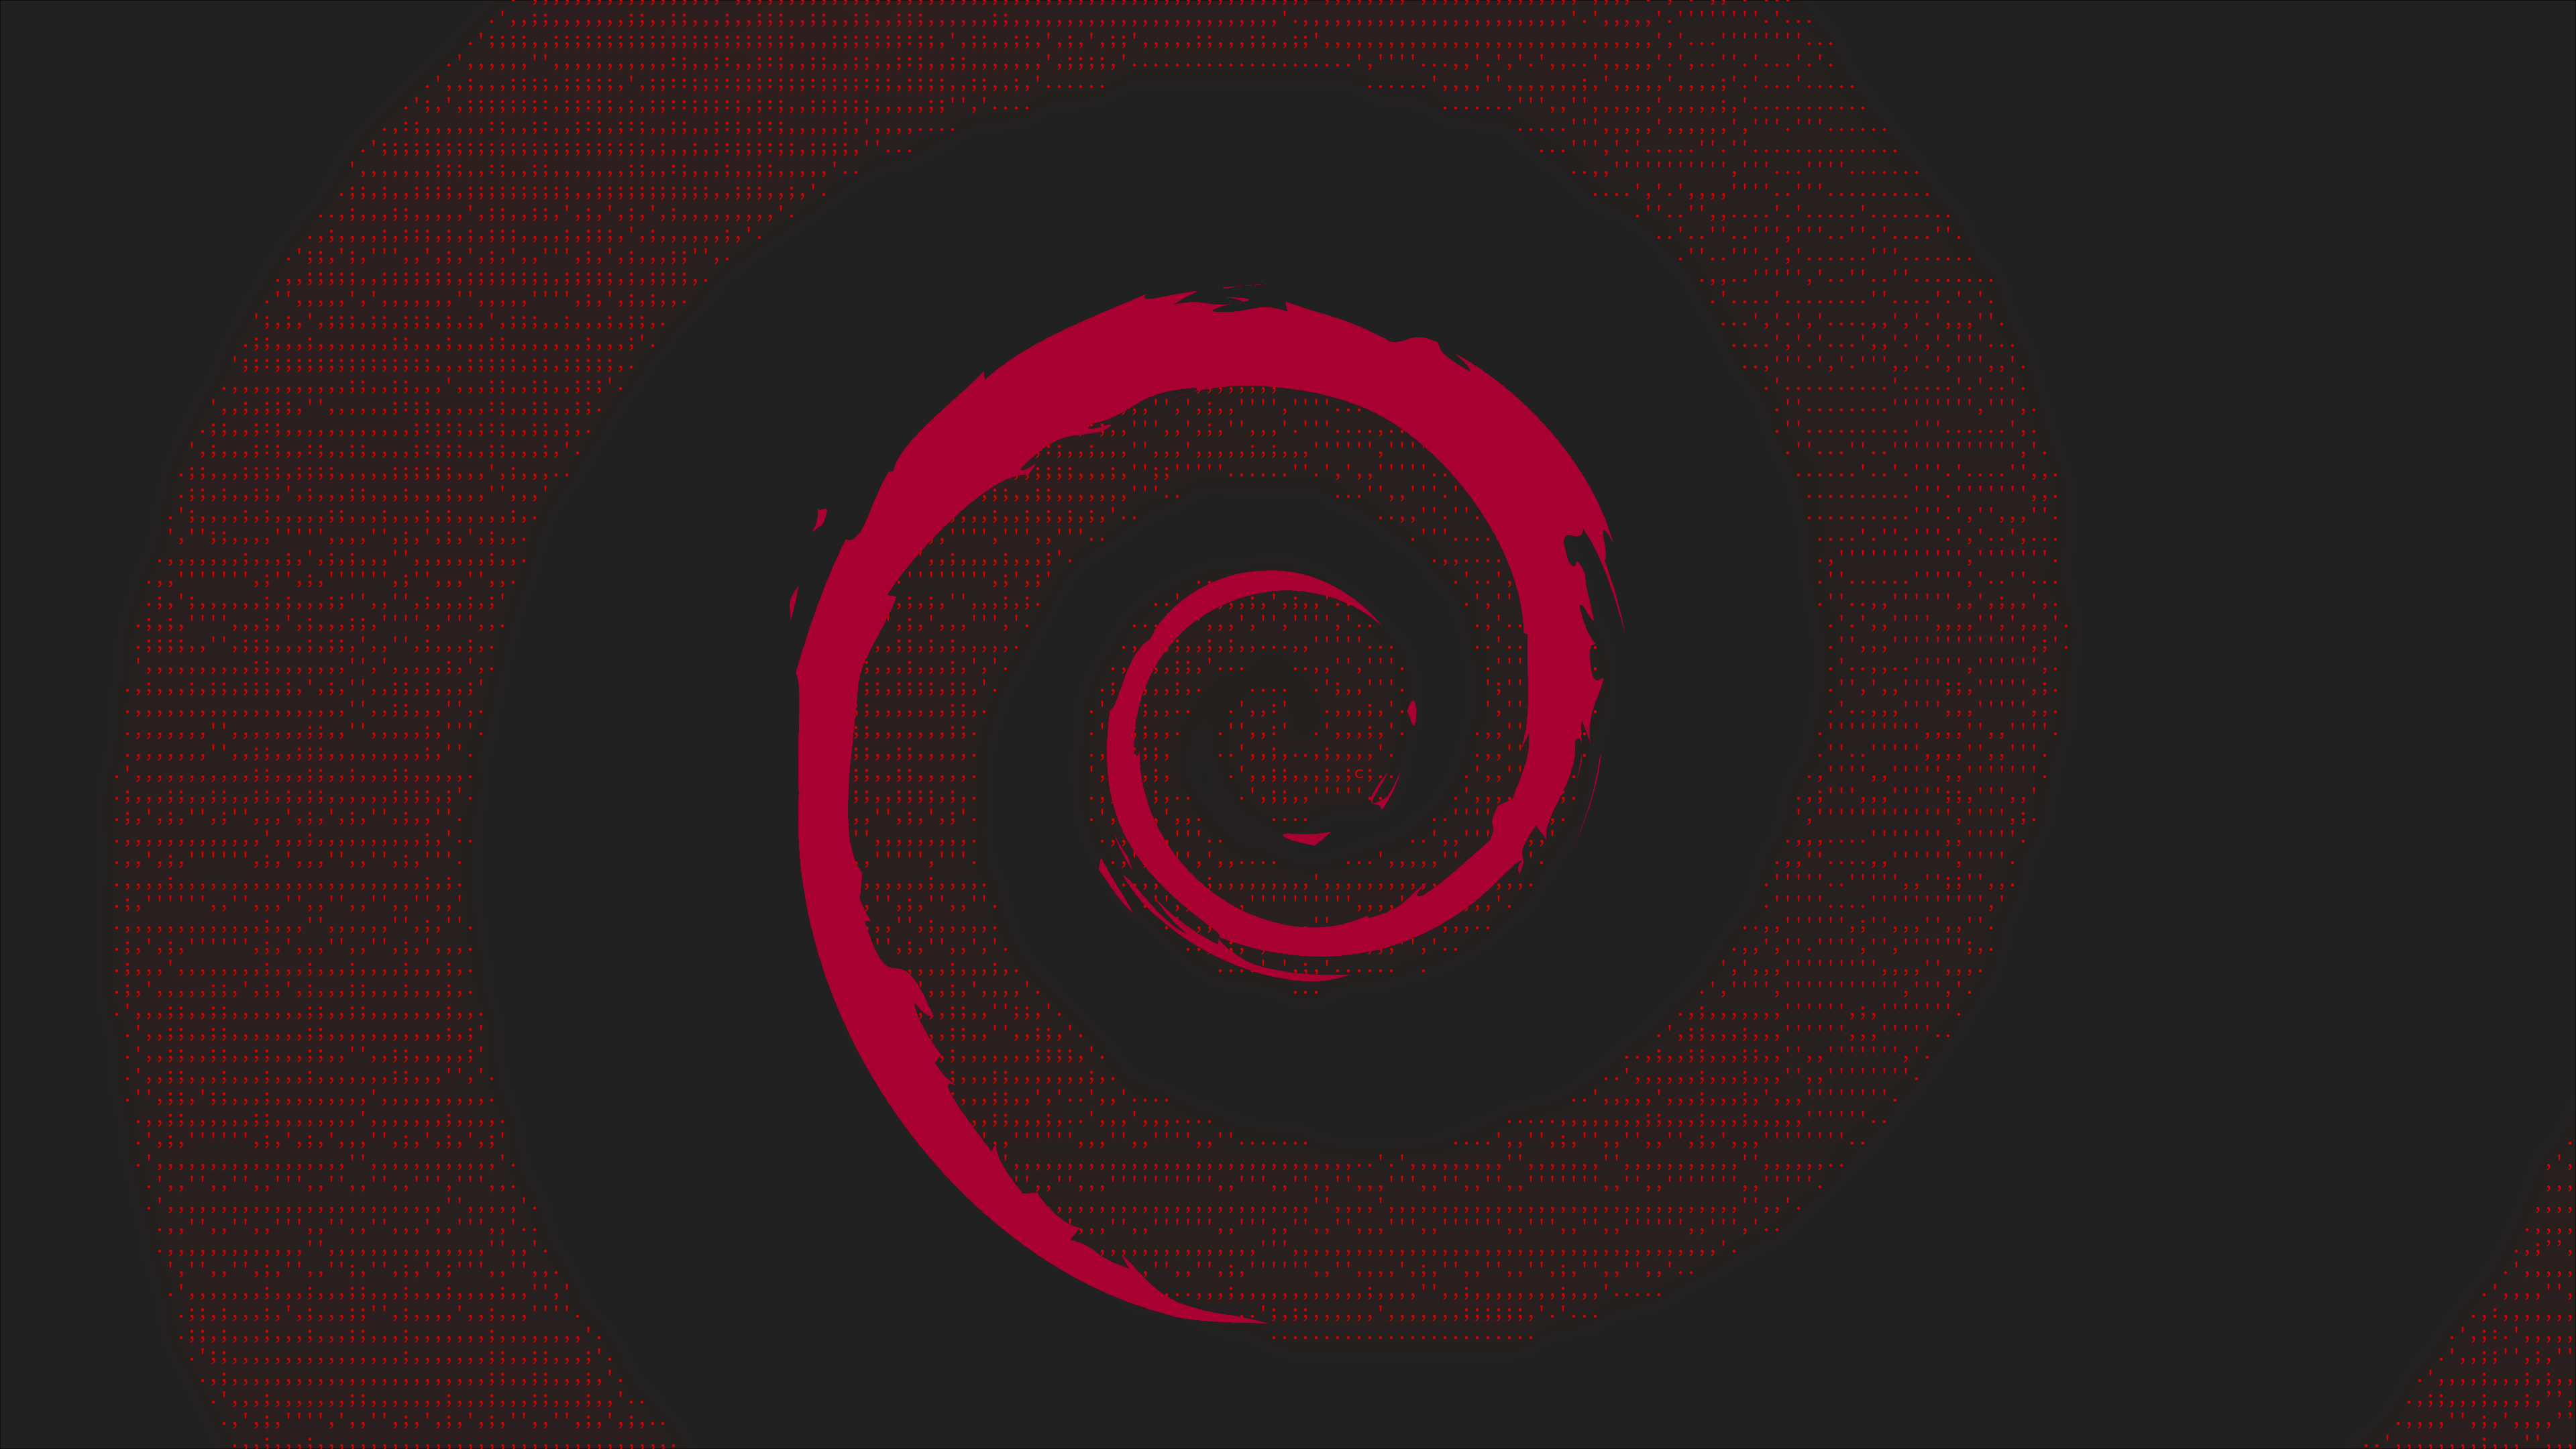 Debian Linux Minimalism Material Minimal Neon Glow ASCii Art Text Material Style Red 3840x2160